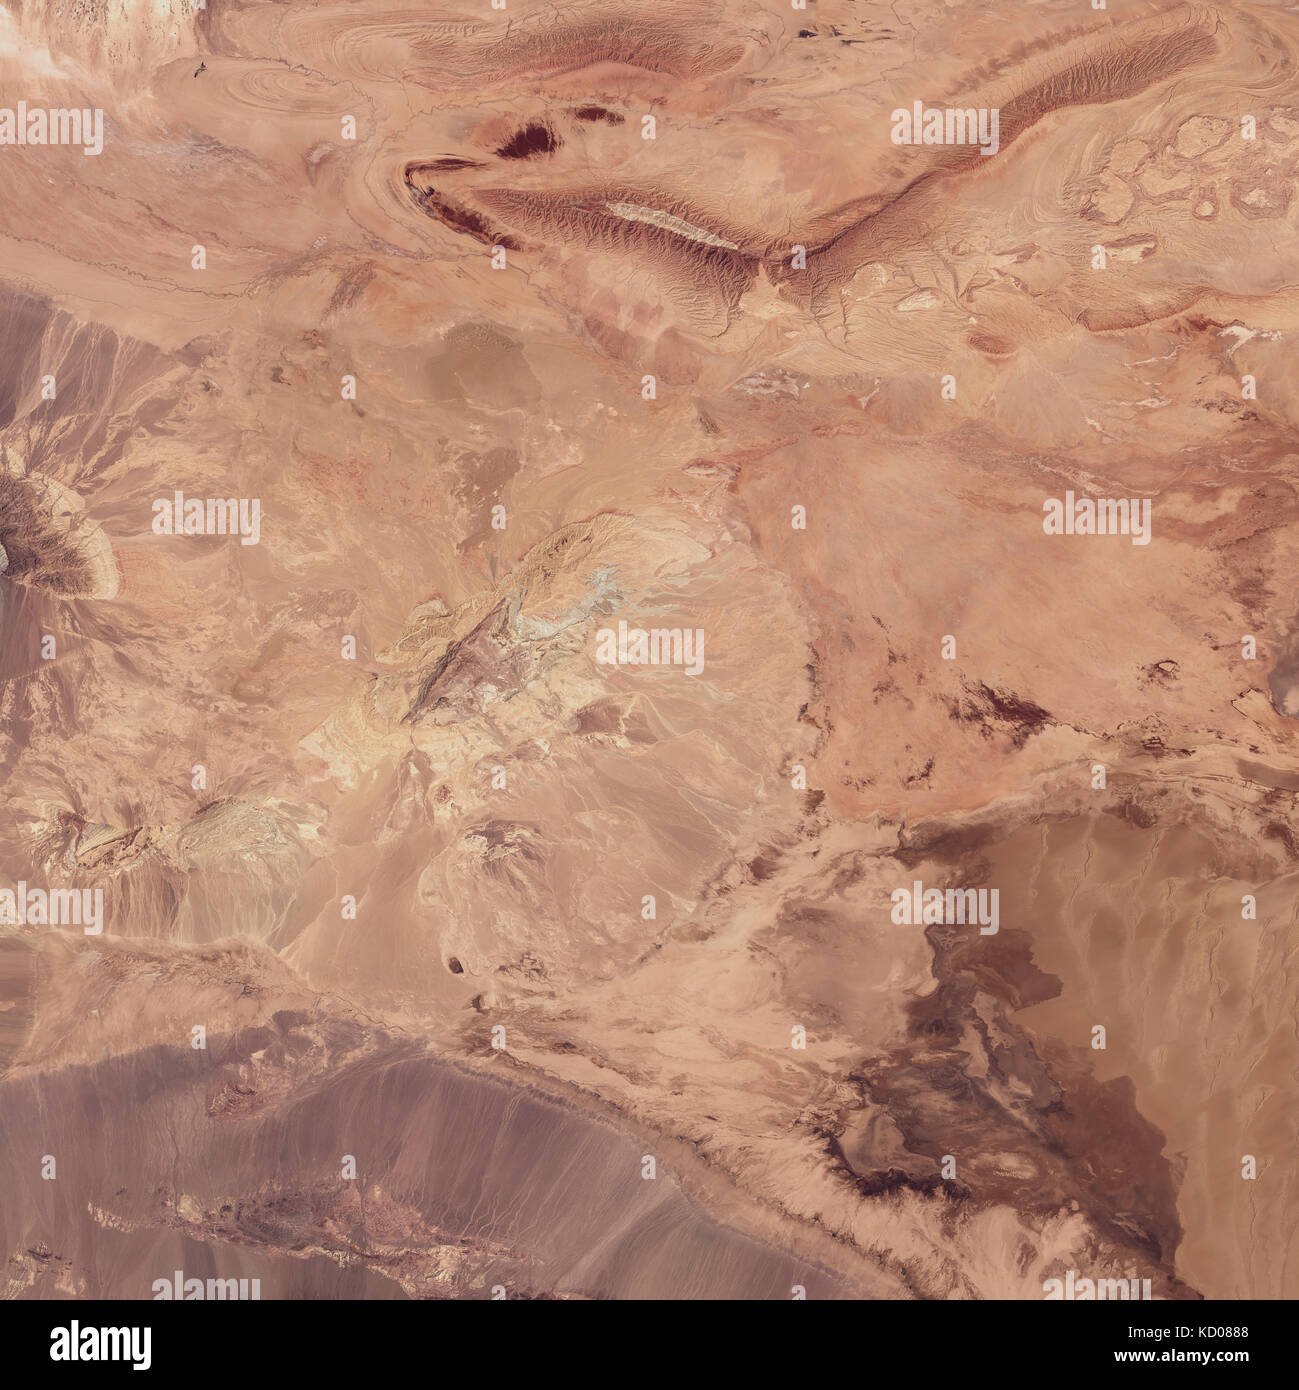 Satellite image of Iran’s Dasht-e Kavir (Great Salt Desert) and the mountain Kuh-e-Gugerd (Kuh-e-Gugird), Iran Stock Photo